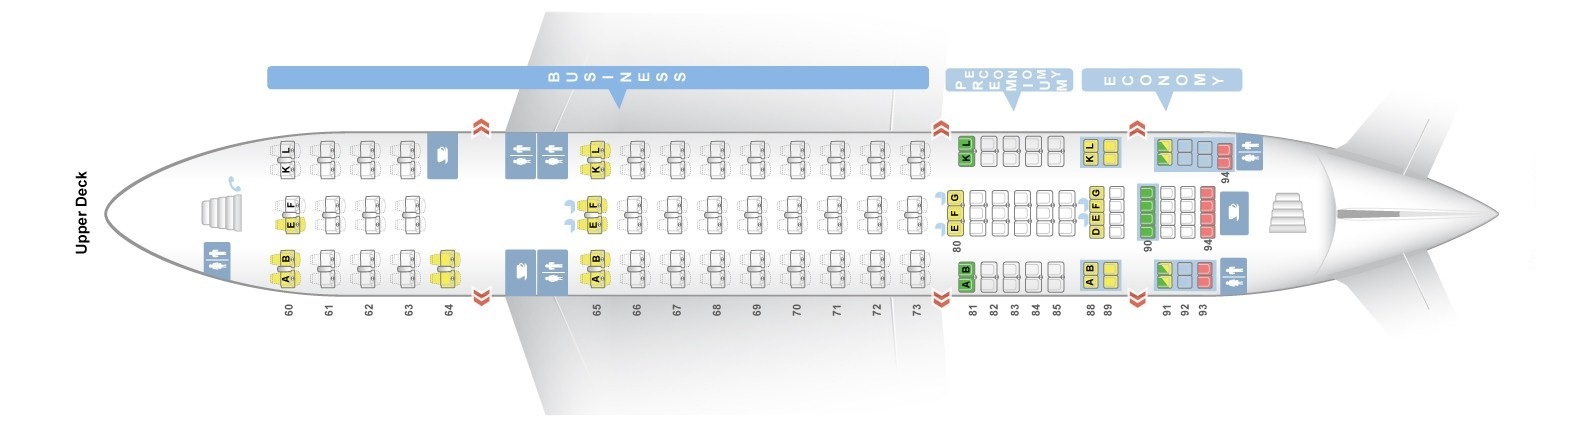 Air France Flight 65 Seating Chart